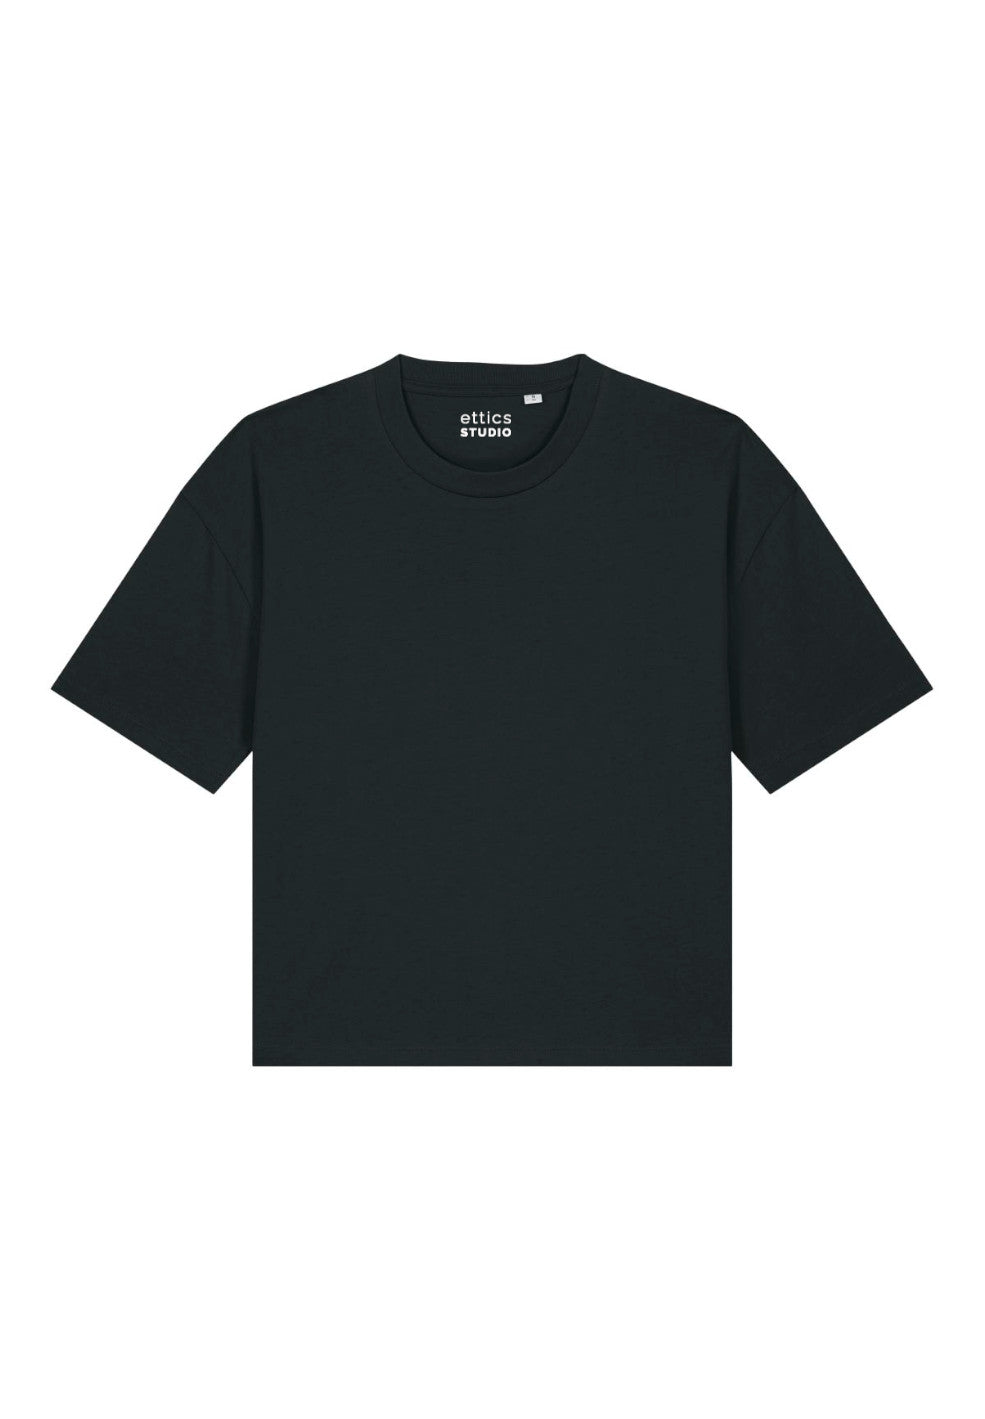 t-shirt nova black